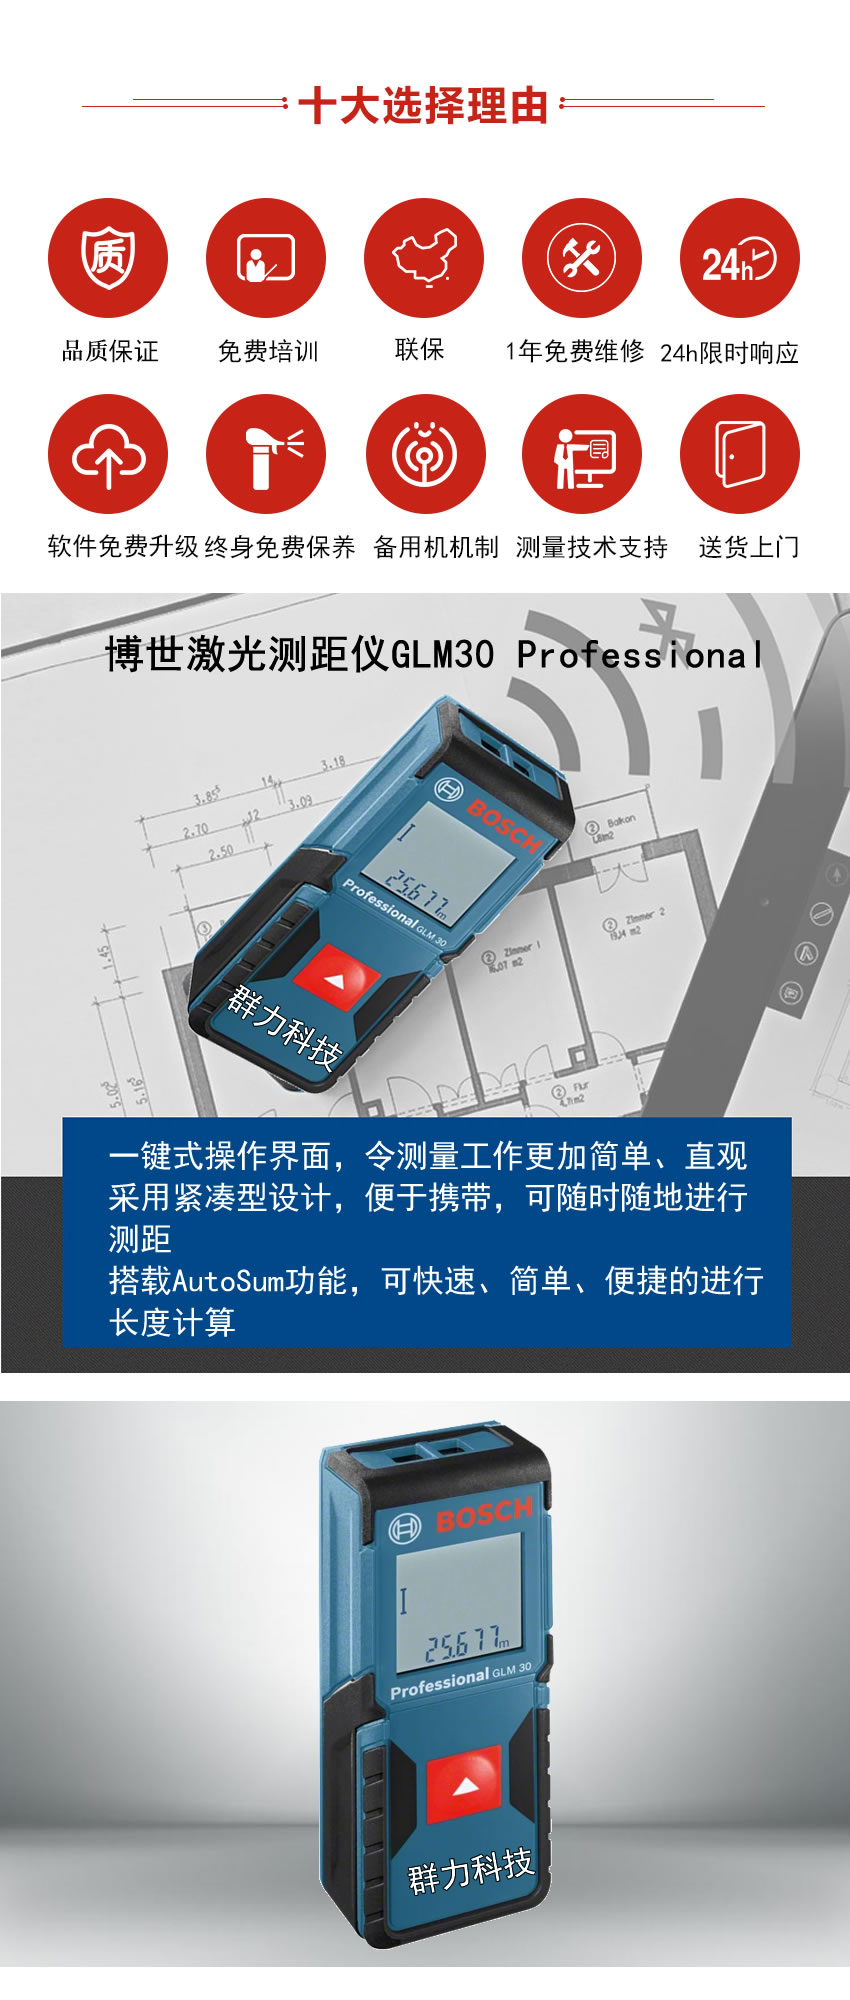 博世激光测距仪GLM30 Professional.jpg